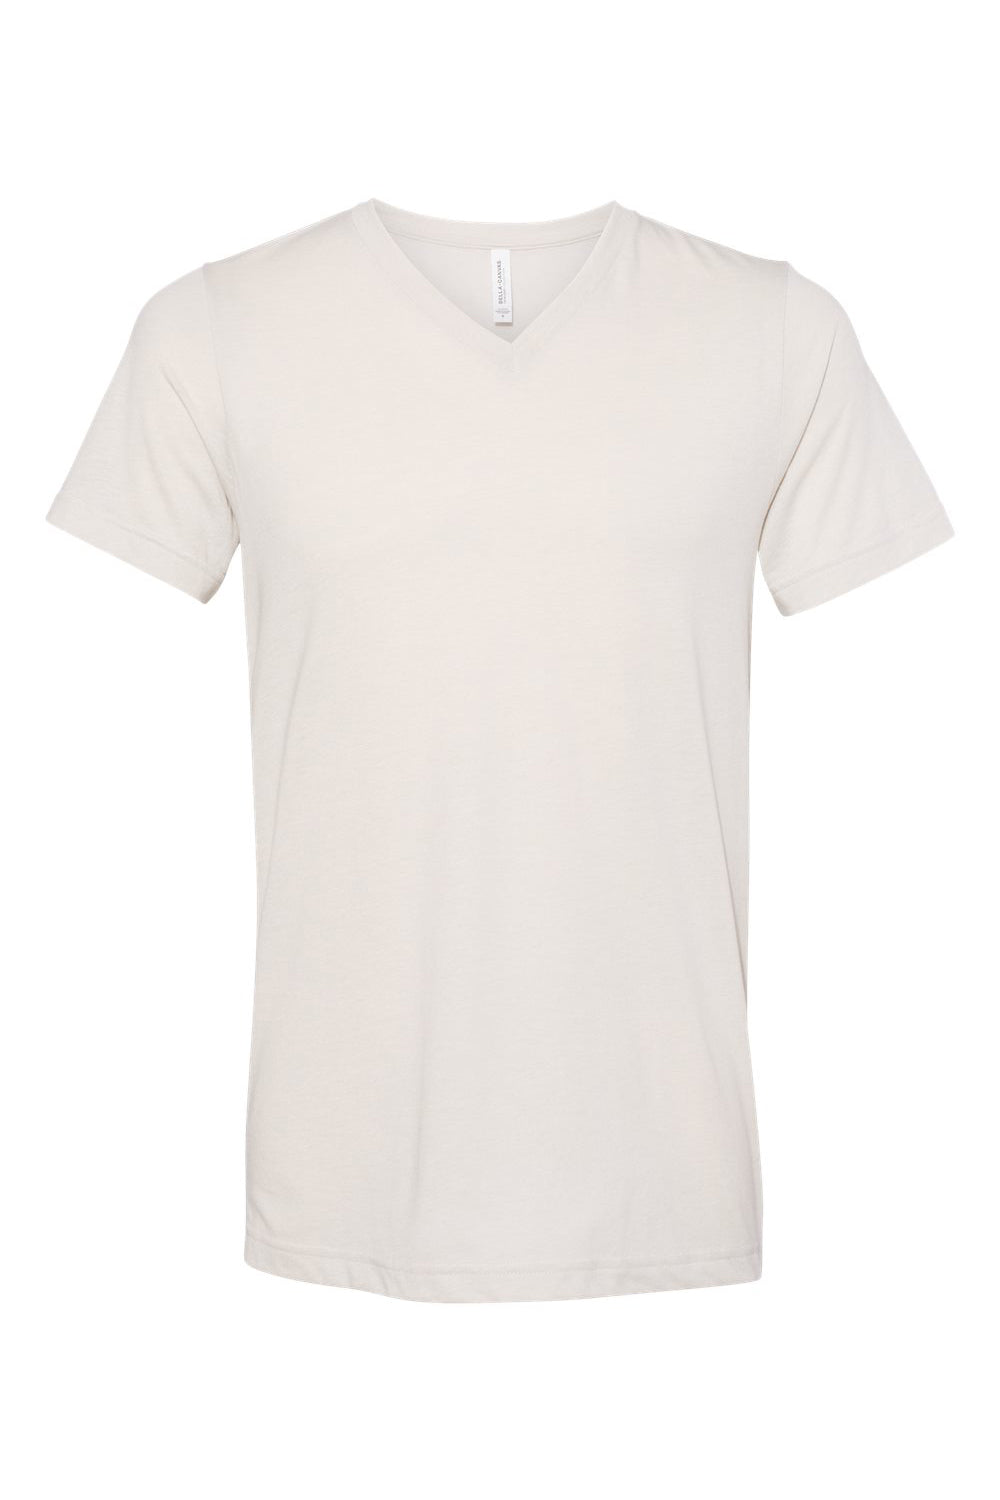 Bella + Canvas BC3415/3415C/3415 Mens Short Sleeve V-Neck T-Shirt Cement Grey Flat Front